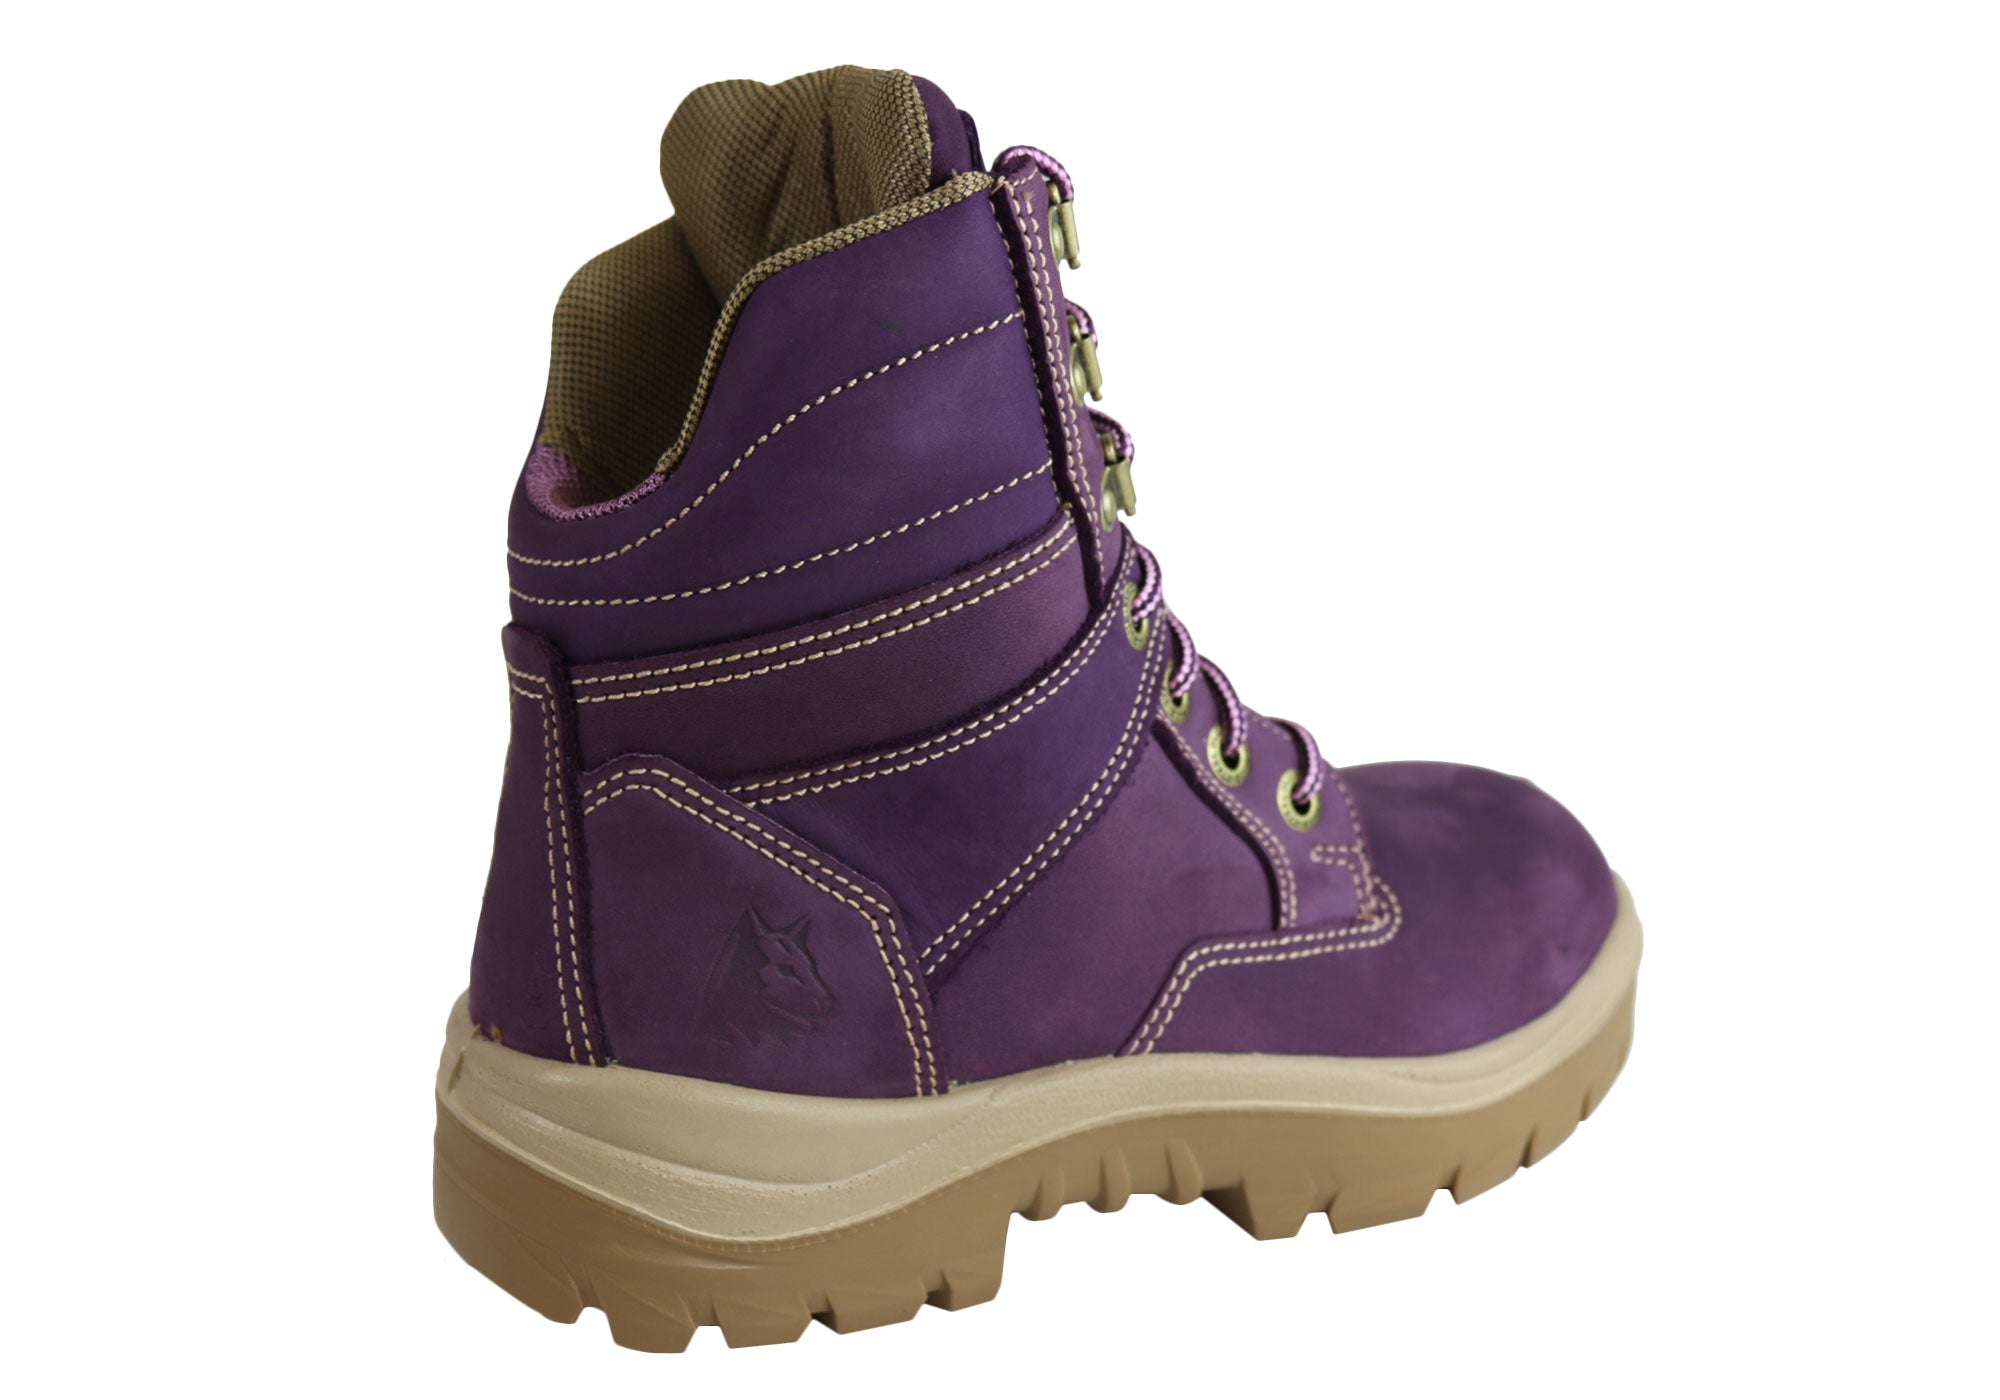 womens purple work boots